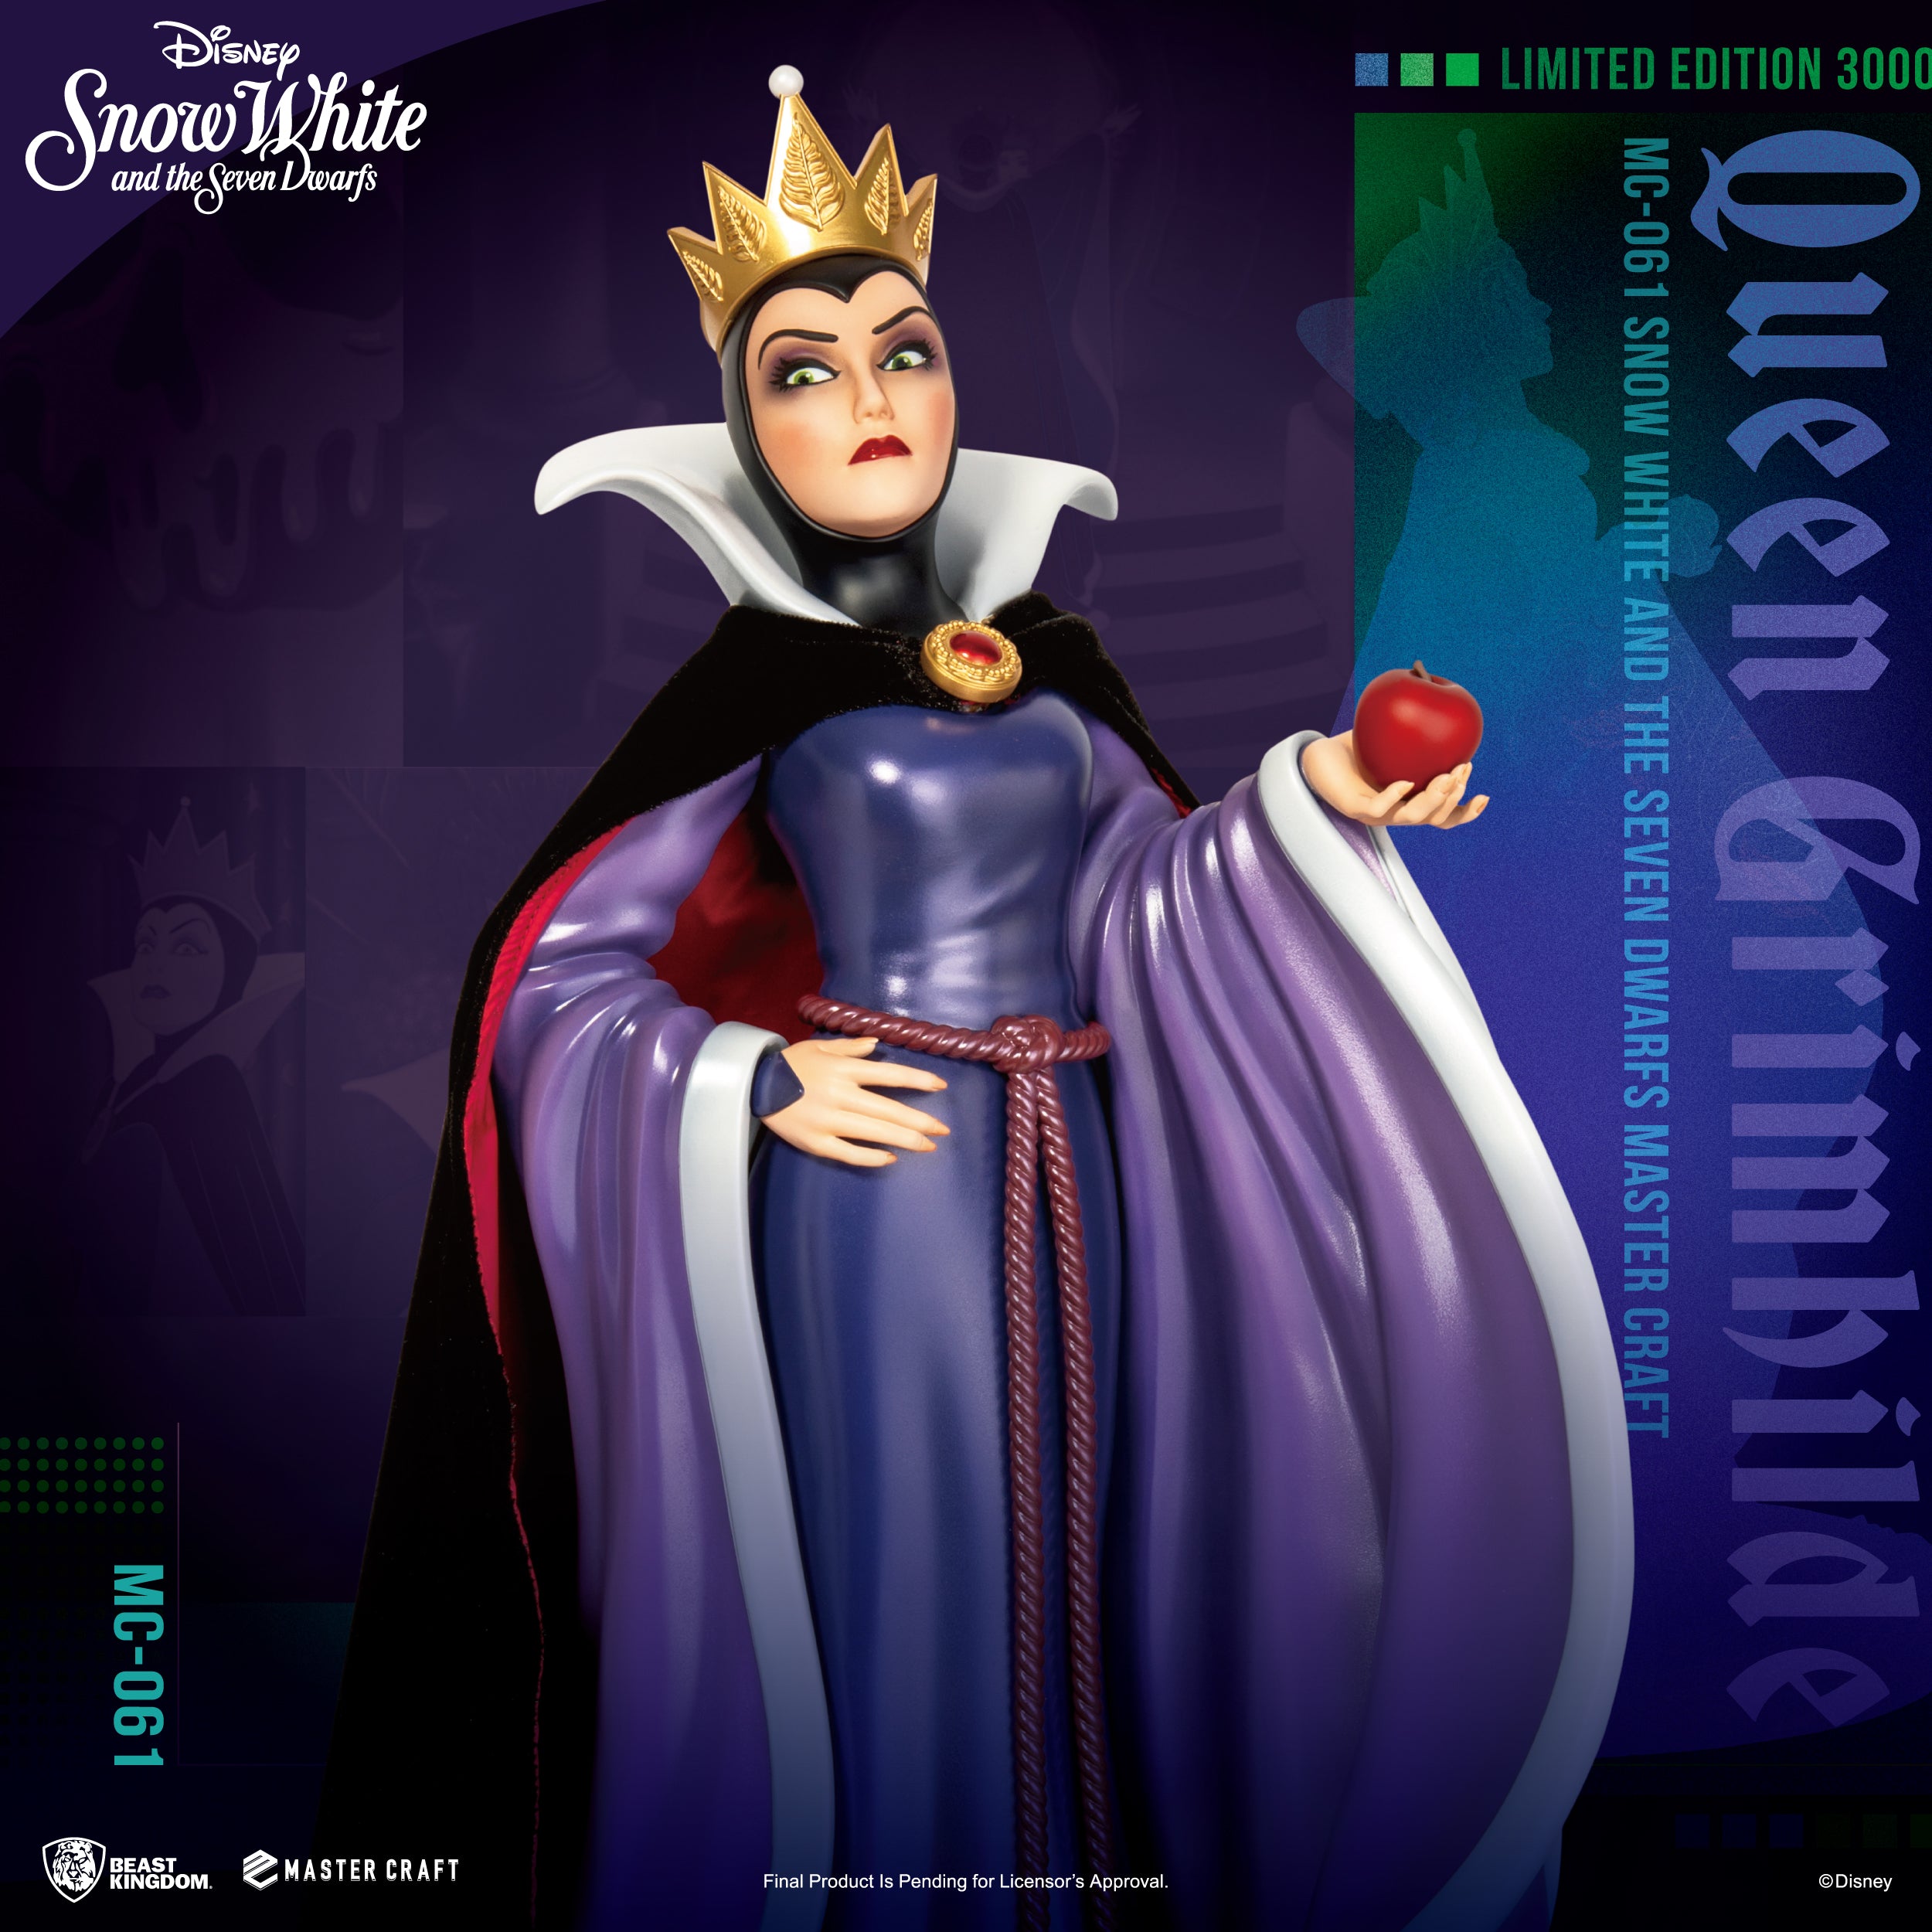 Beast Kingdom MC-061 Disney Snow White And The Seven Dwarfs Master Craft Queen Grimhilde 1:4 Scale Master Craft Figure Statue